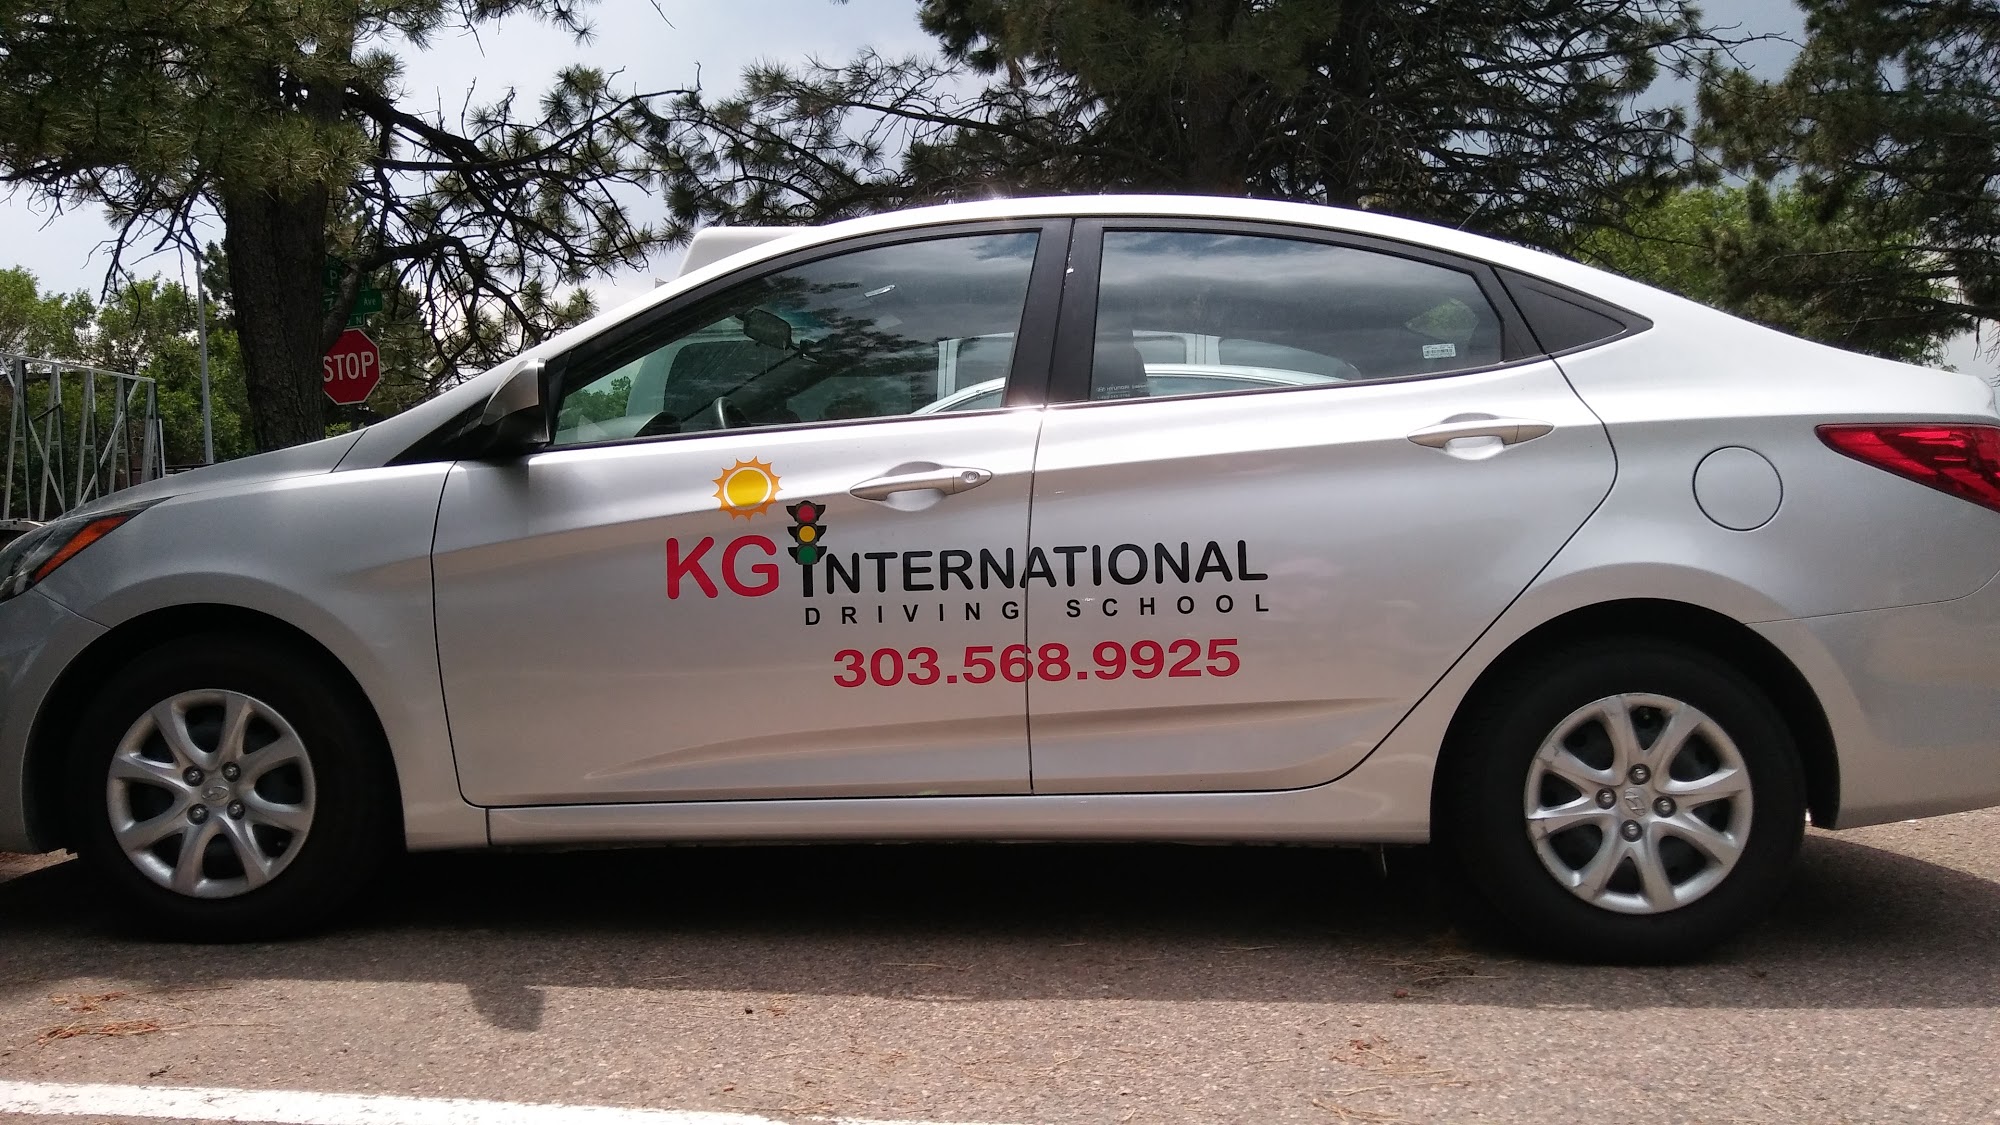 KG International Driving School - Denver